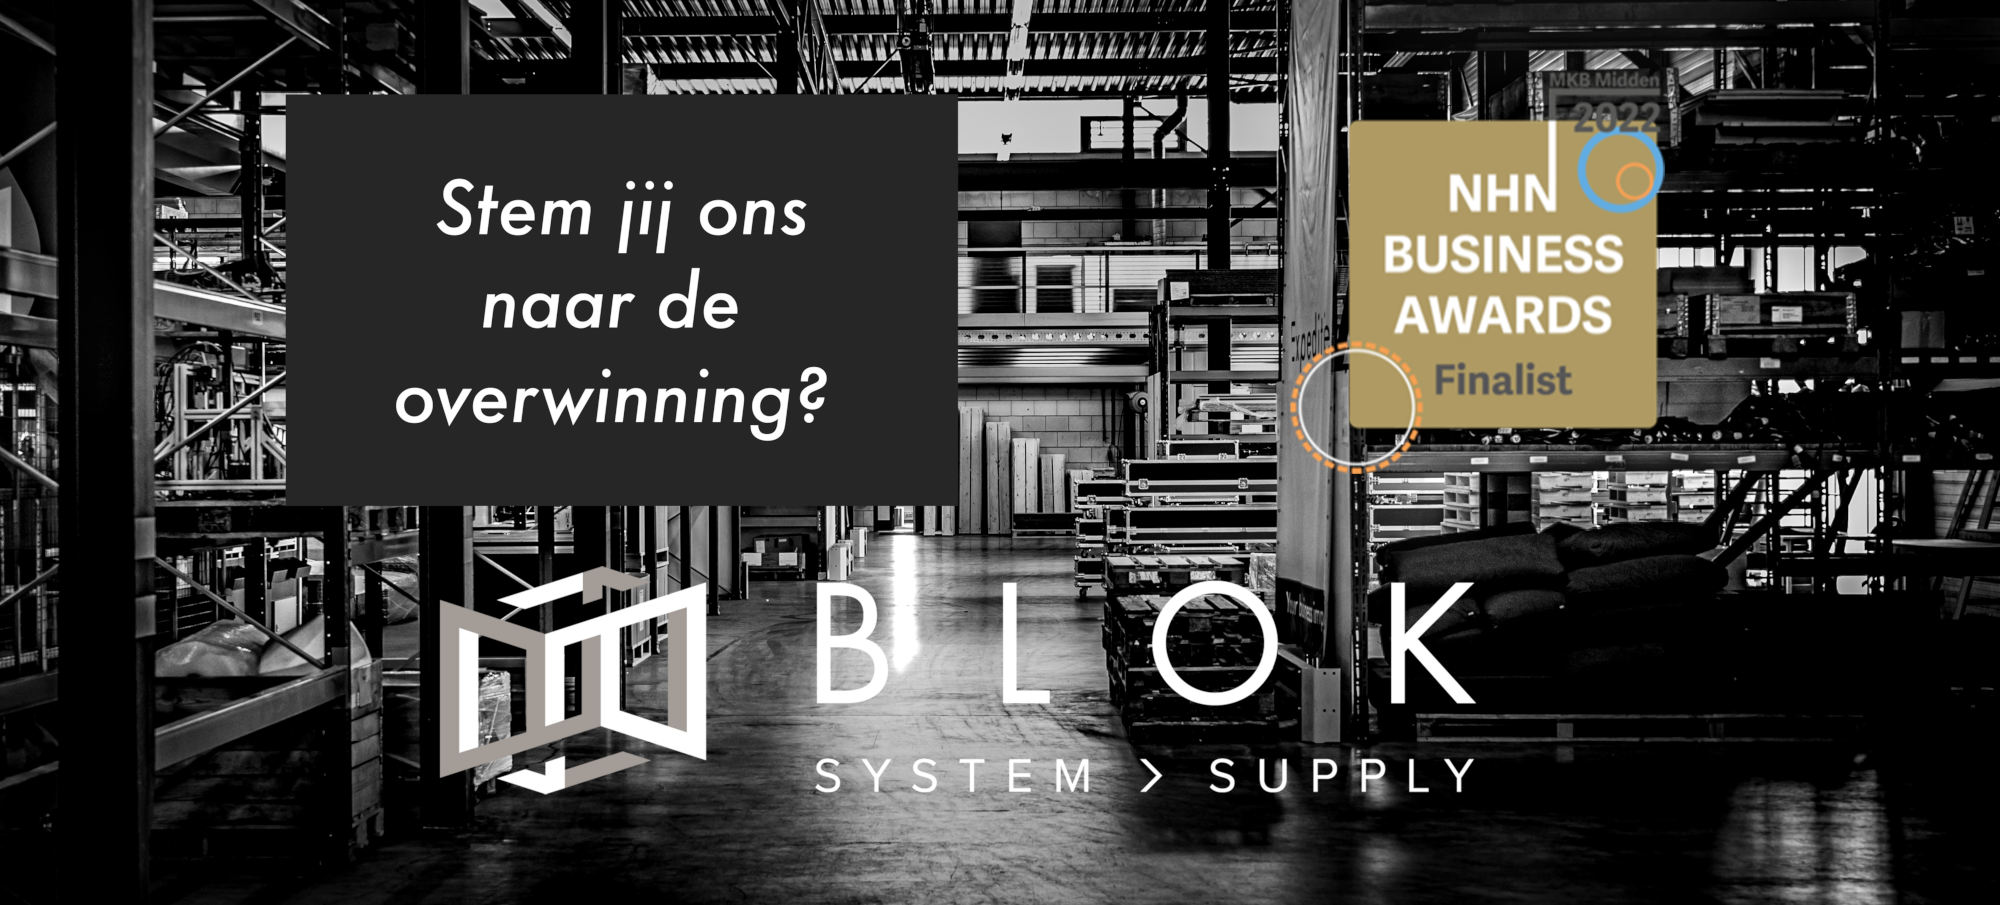 Blok System Supply finalist van de NHN Business Awards 2022